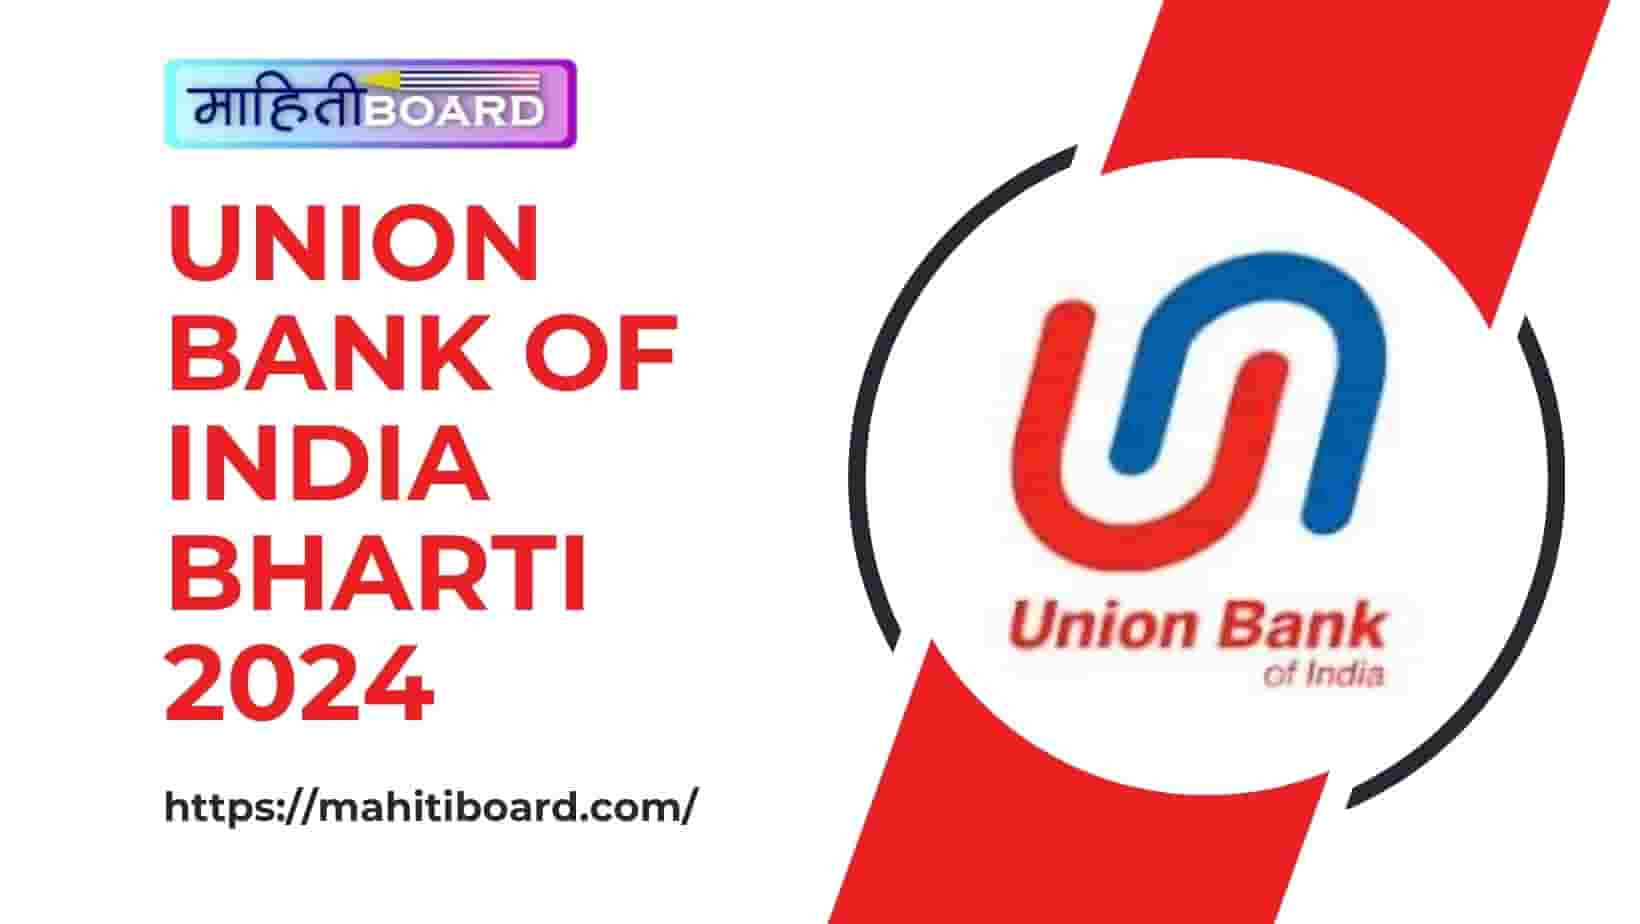 Union Bank Of India Bharti 2024